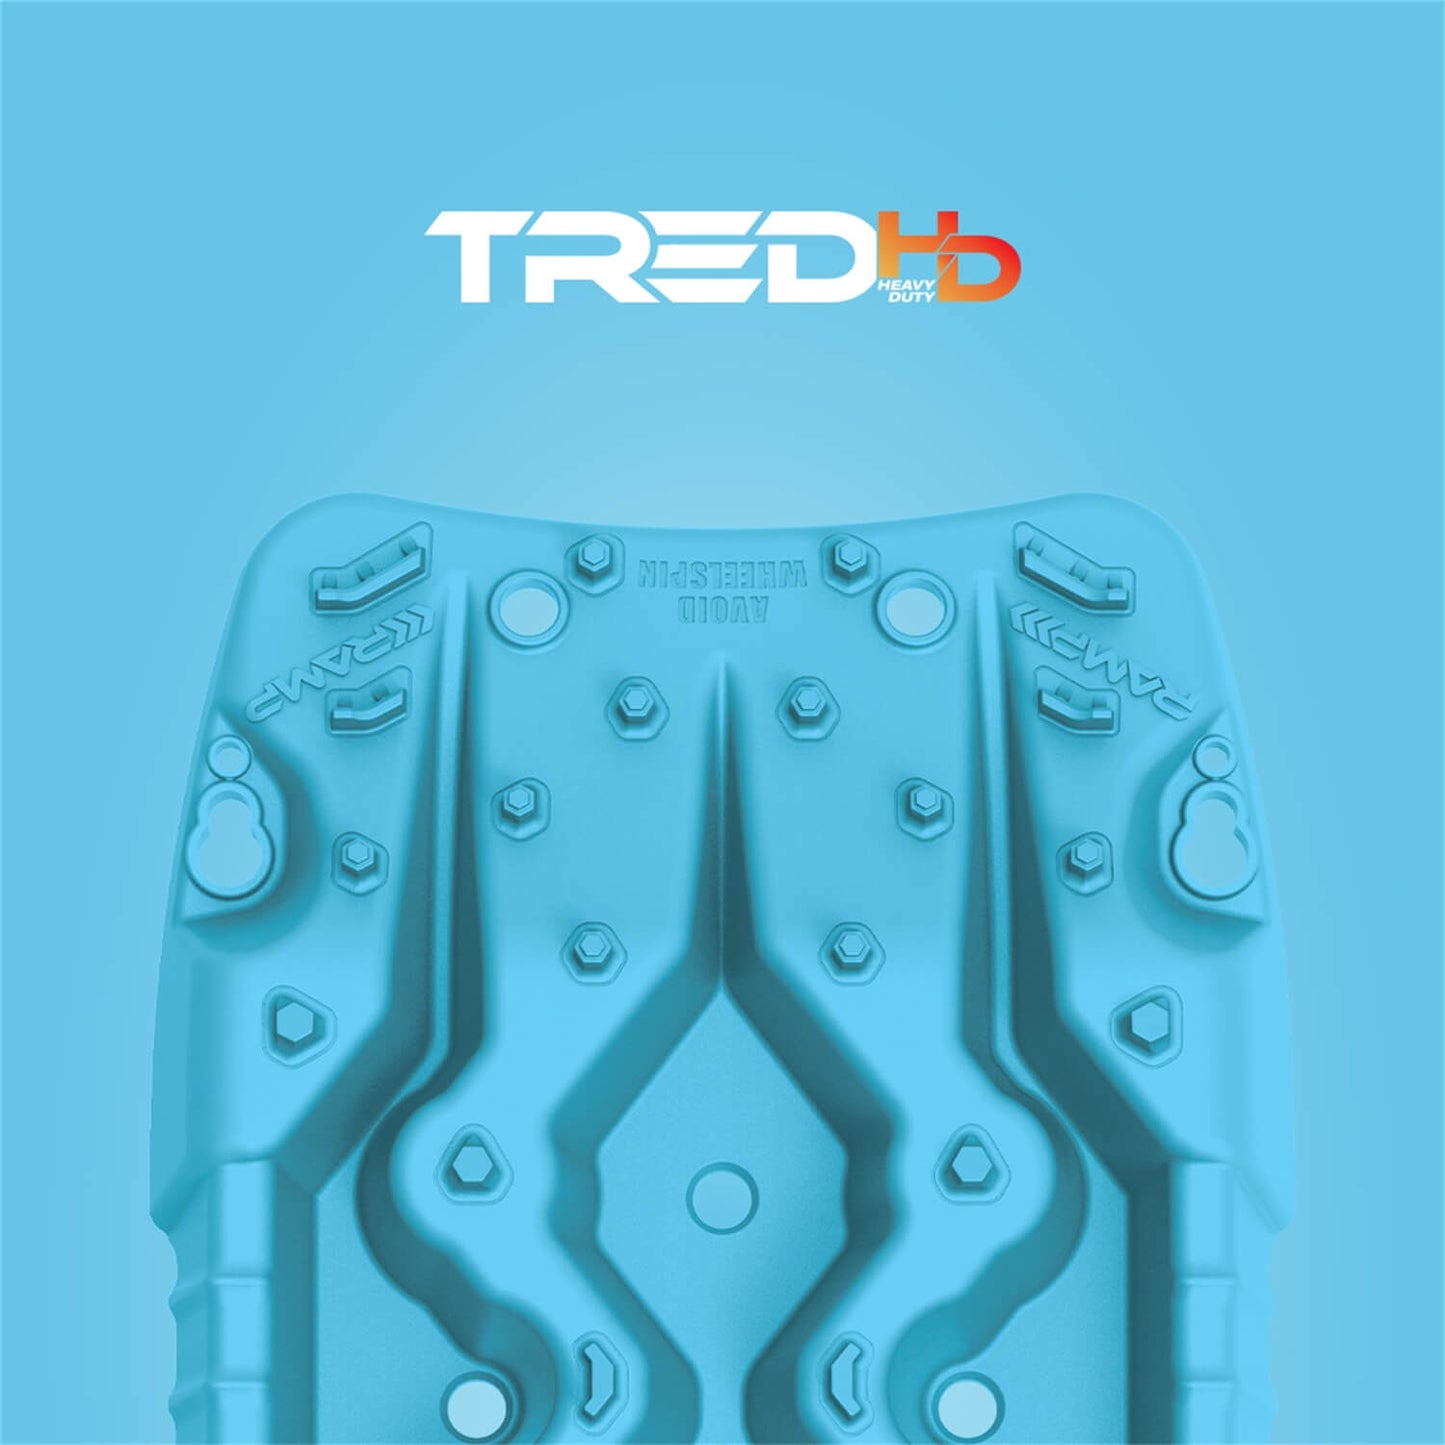 ARB - TREDHDAQ - TRED HD Aqua Recovery Boards